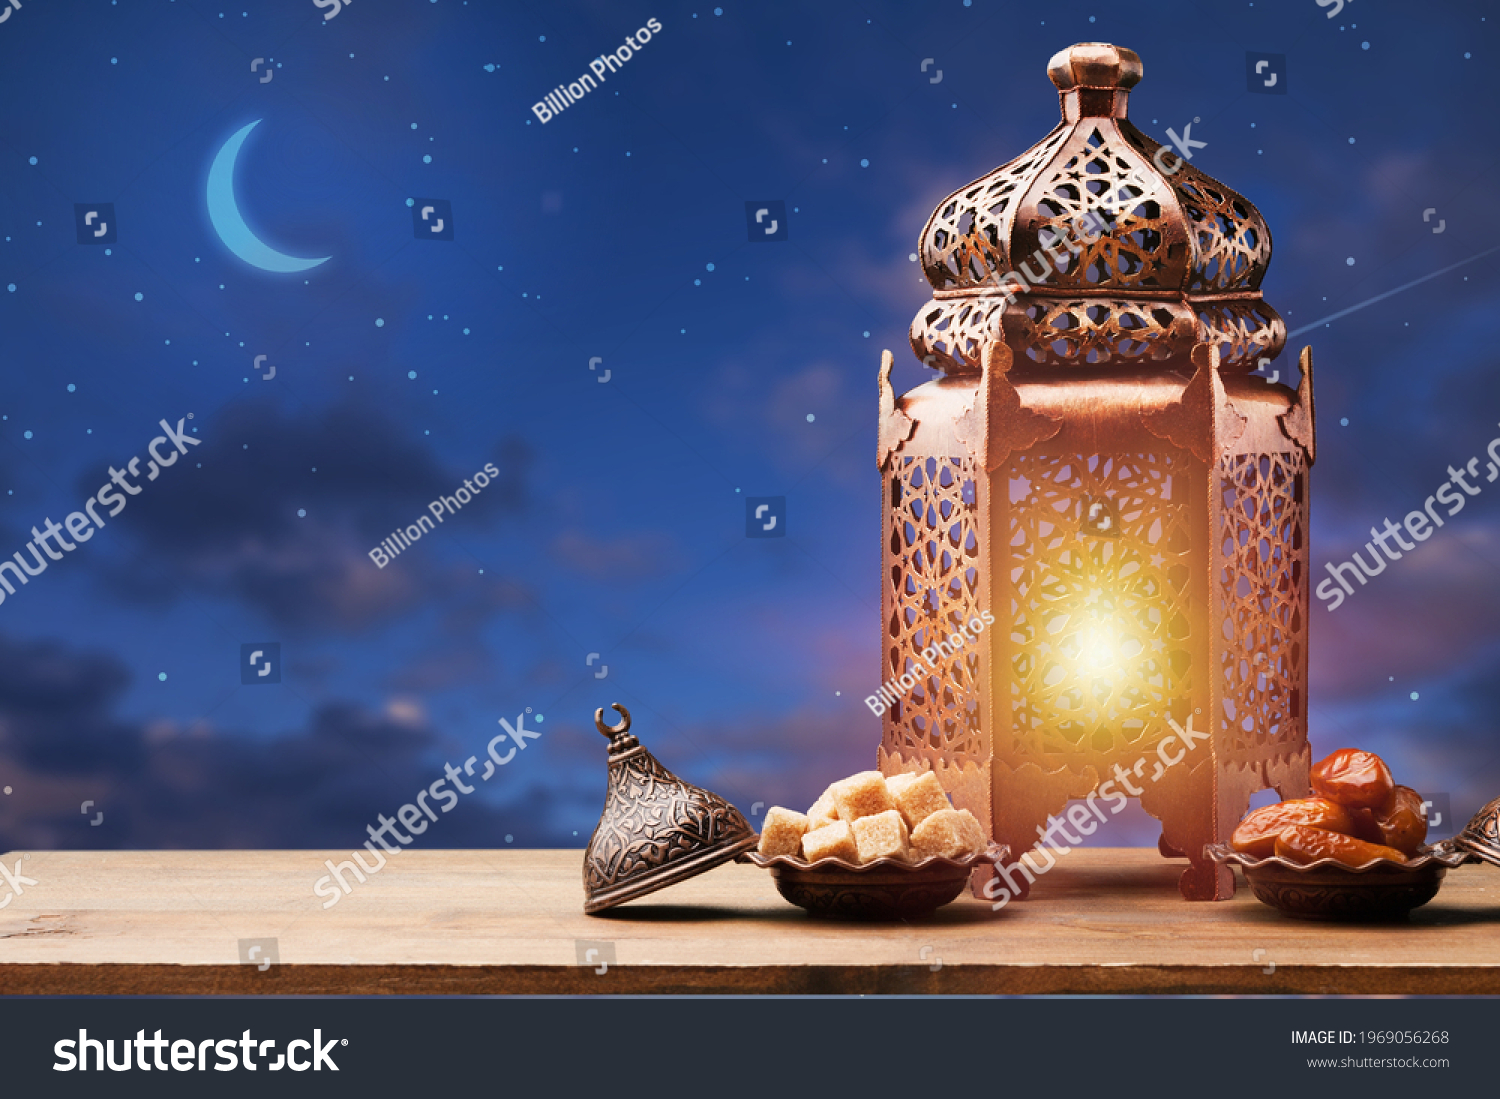 Islamic Greeting Muslim Holidays Arabic Ramadan Stock Photo 1969056268